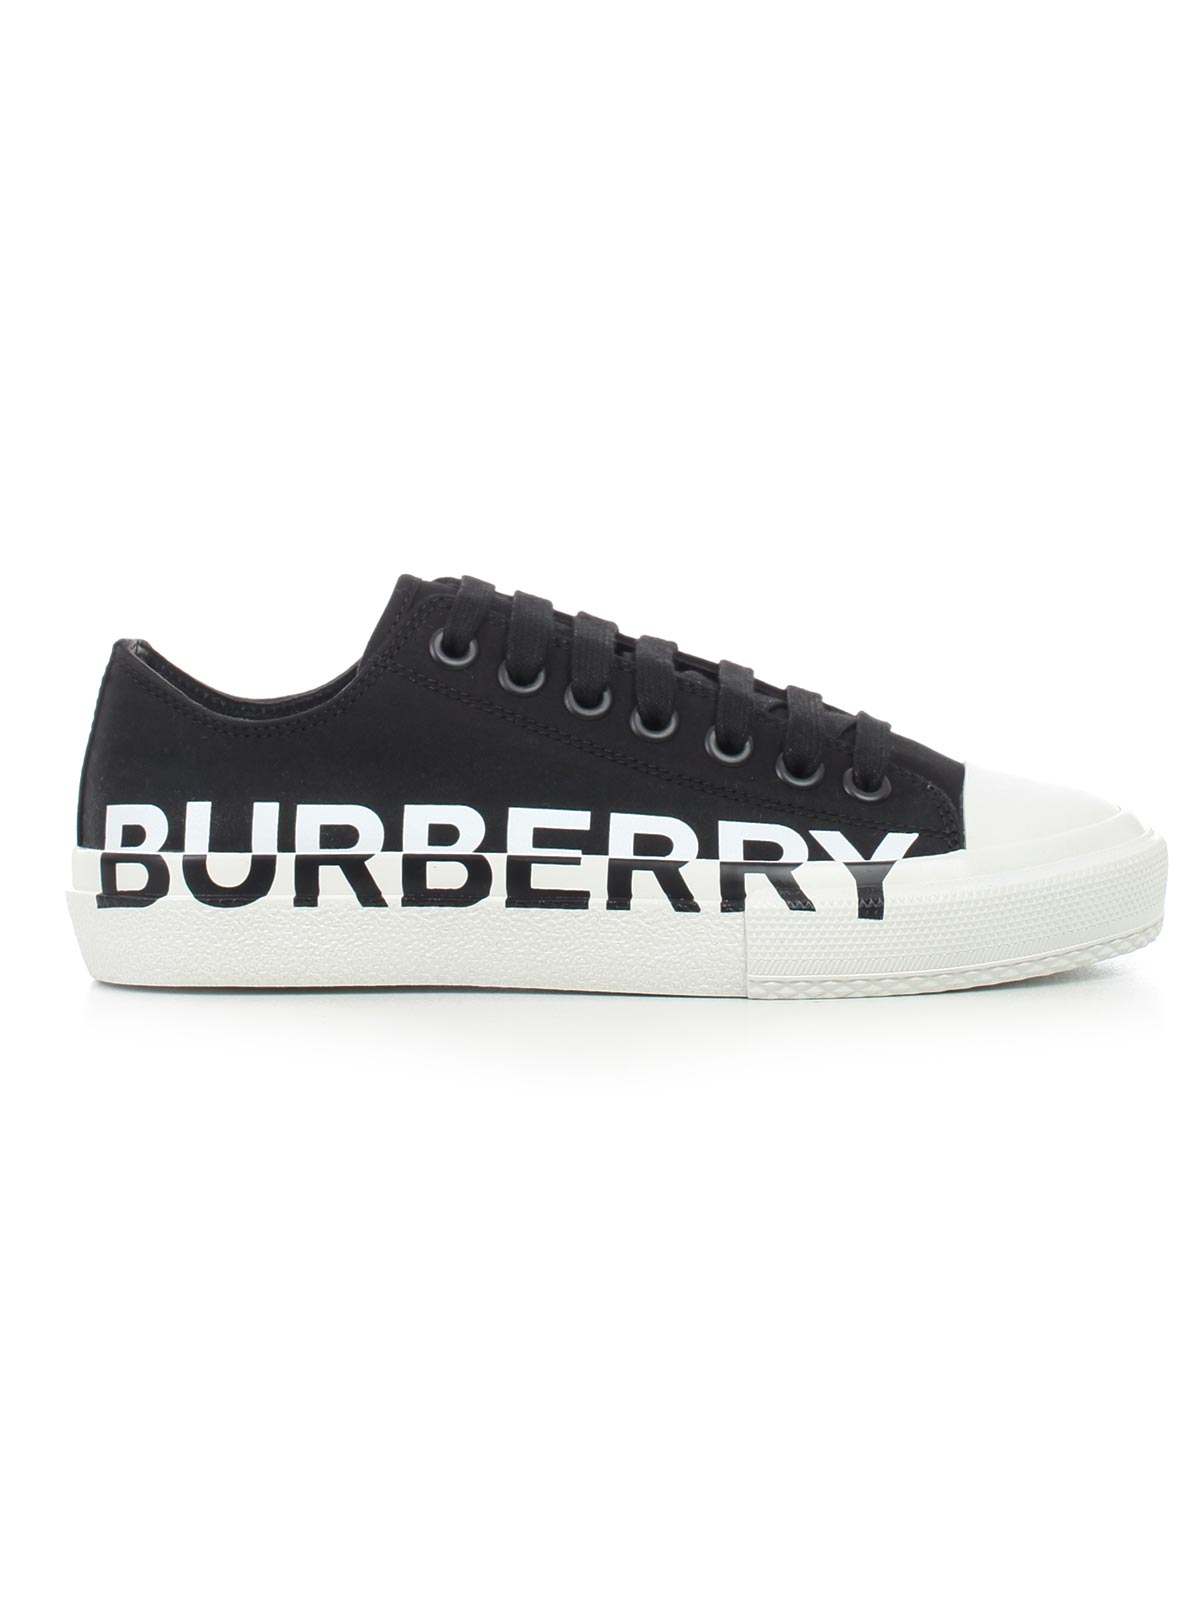 Burberry Shoes 8015795 - A1189 BLACK 